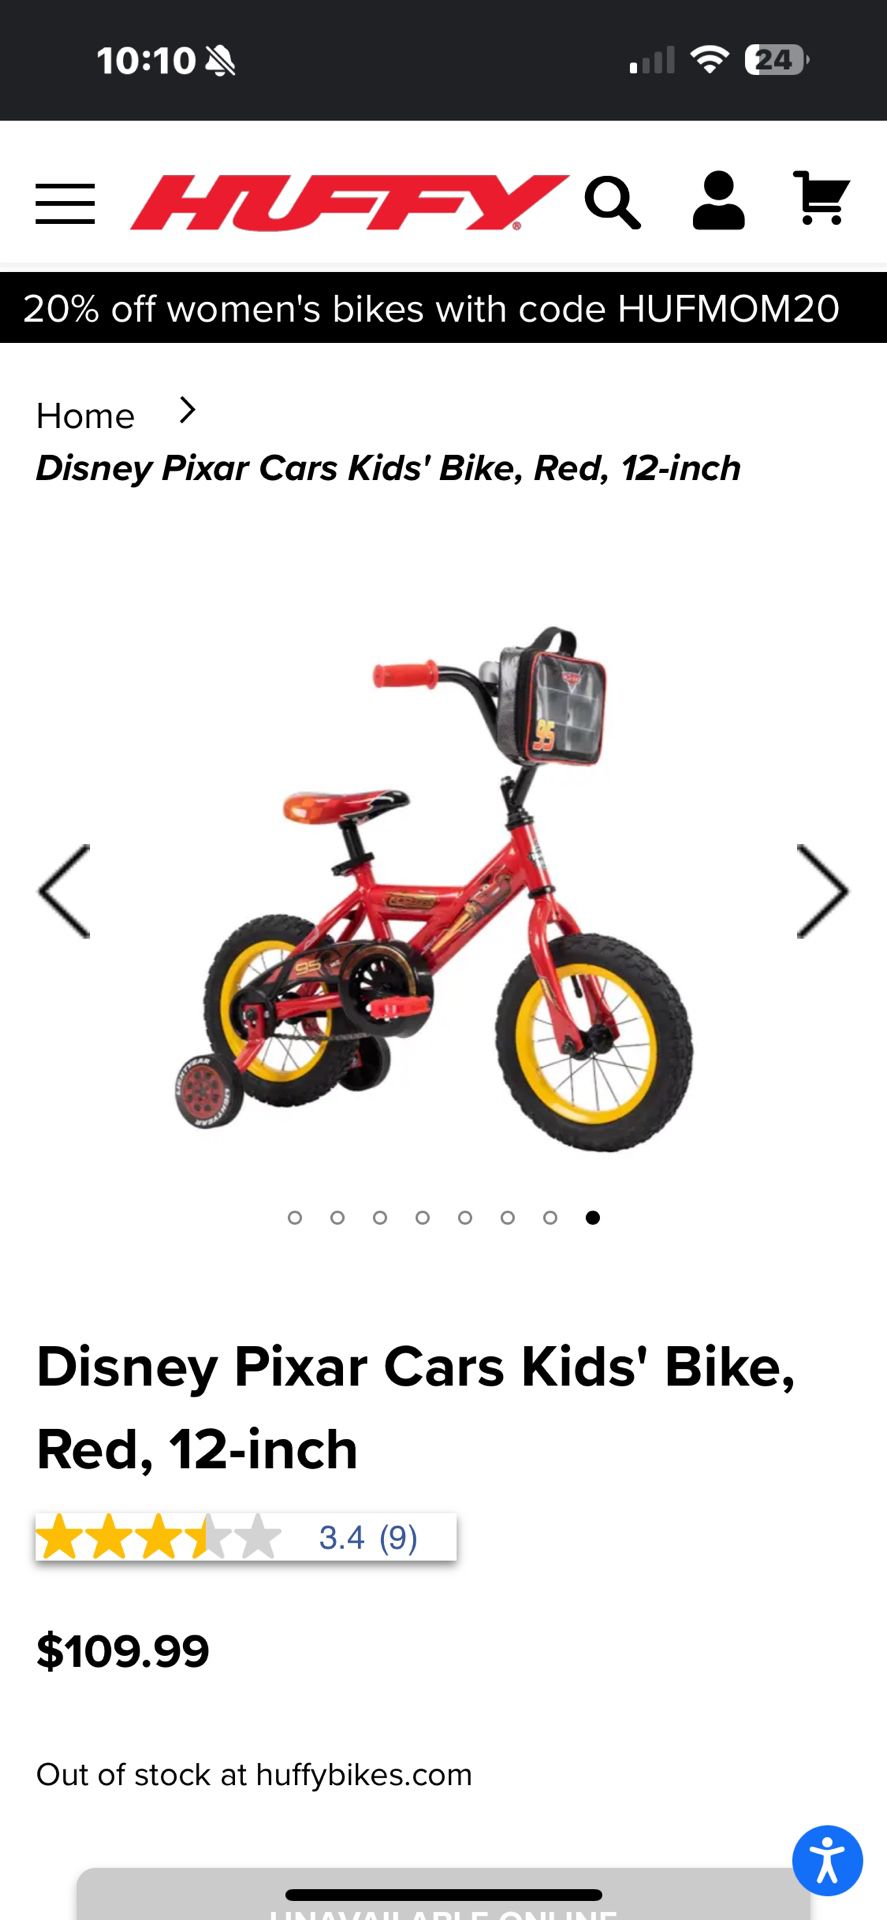 Disney Pixar Cars Kids' Bike, Red, 12-inch